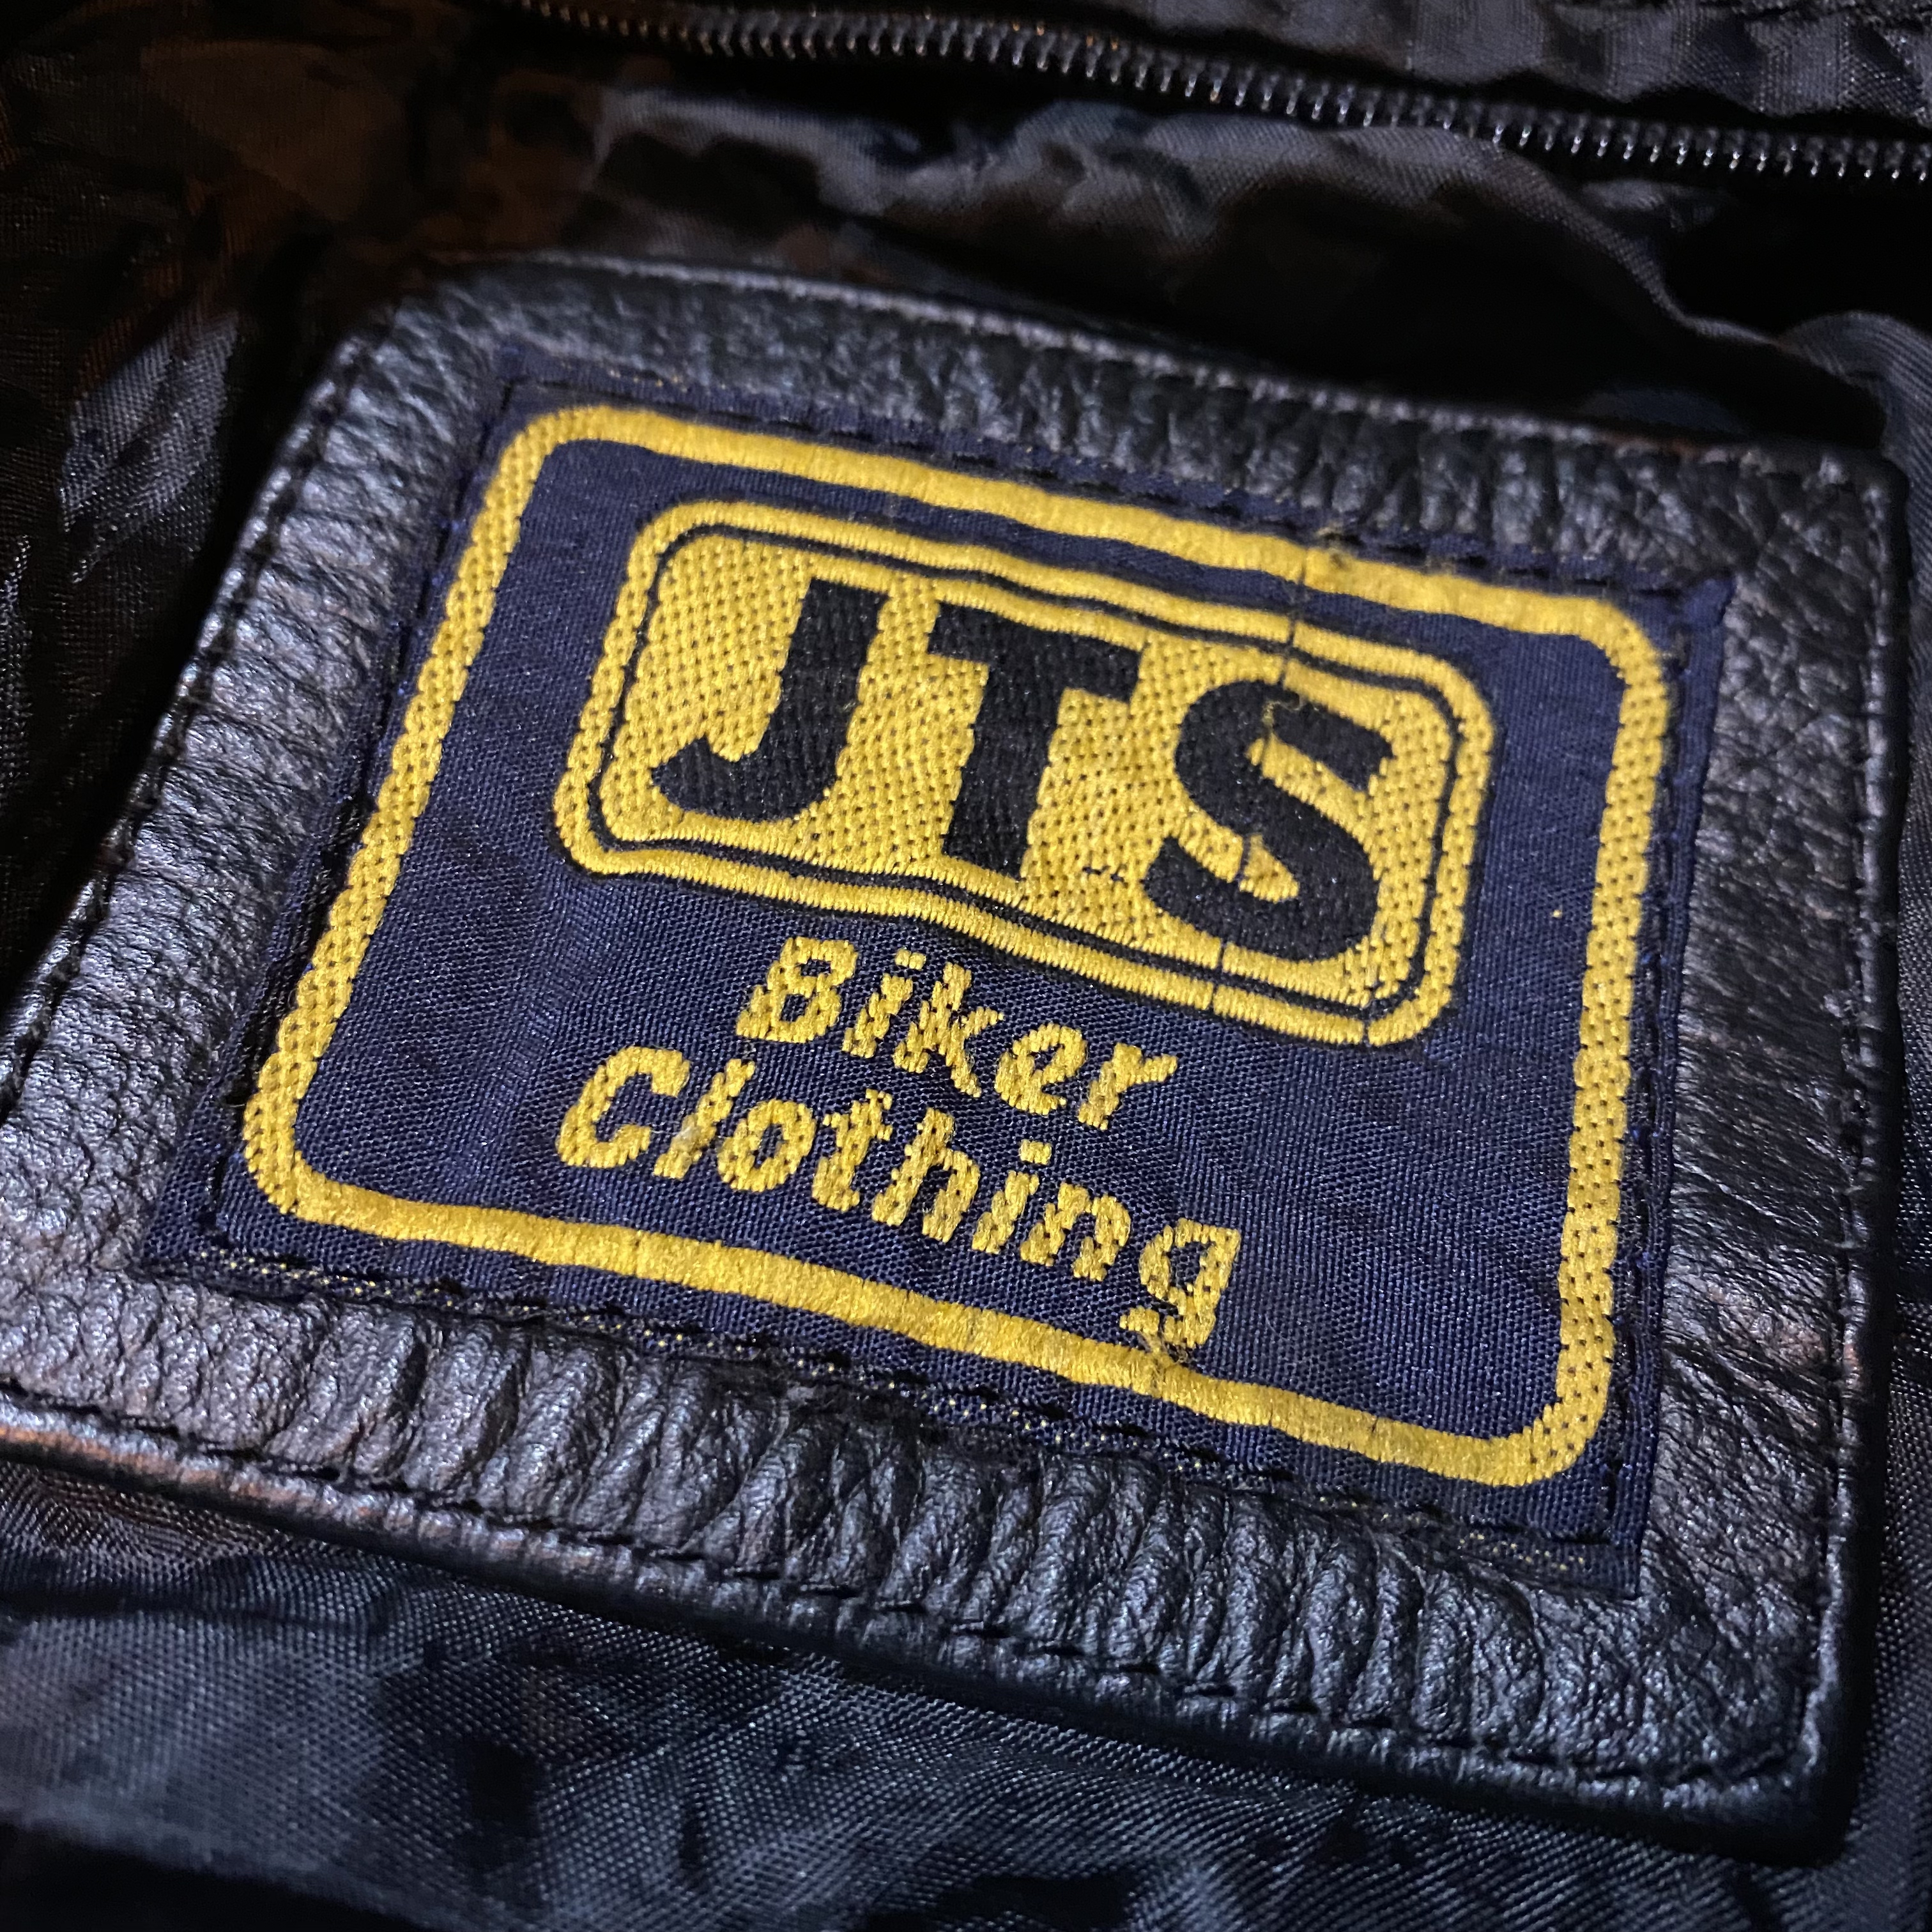 JTS Biker Clothing designed riders jacke